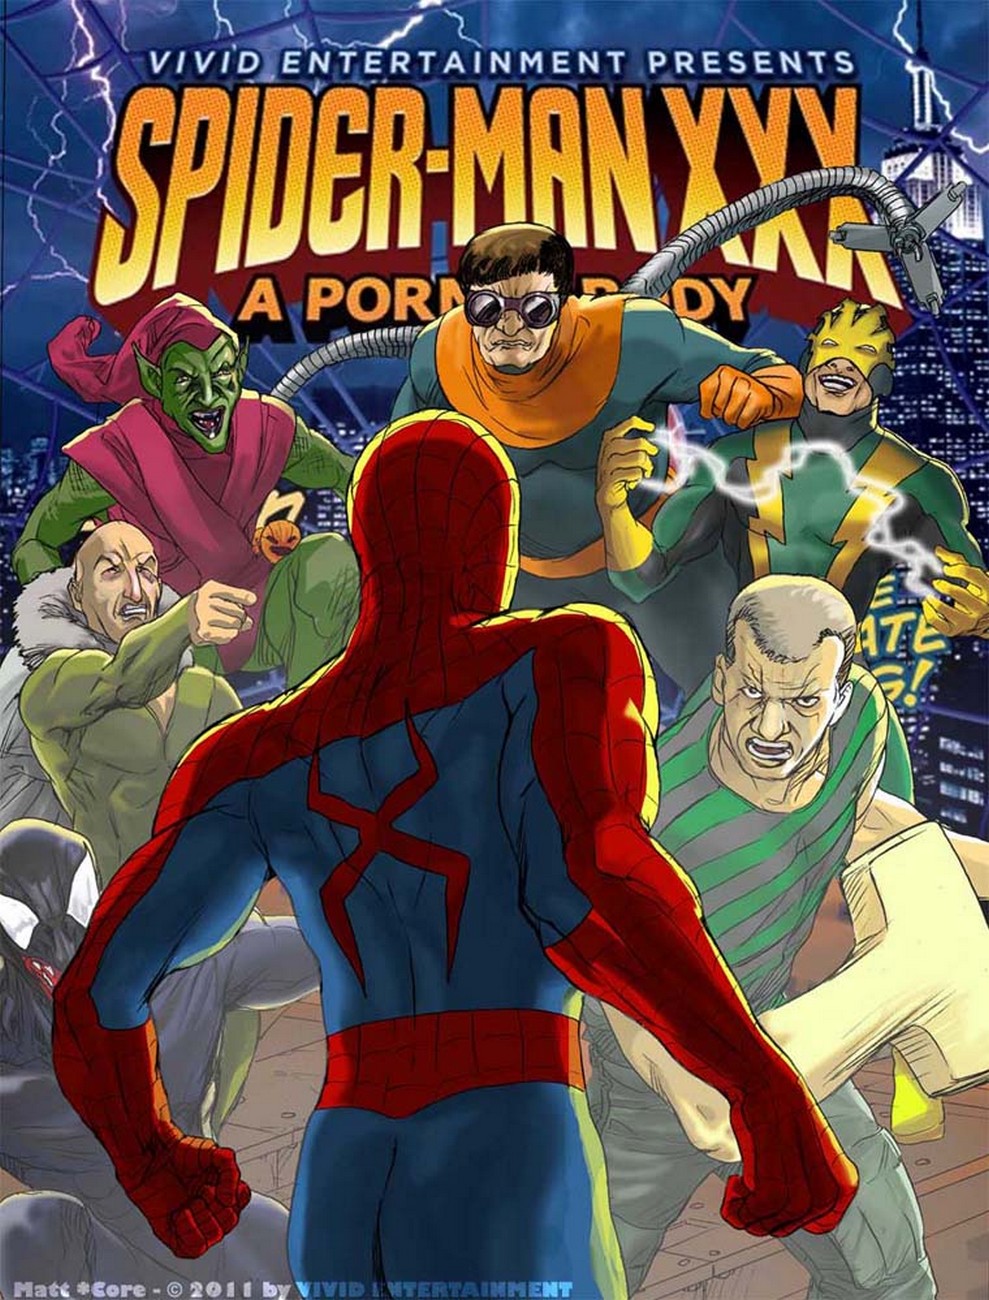 Cover Spiderman XXX